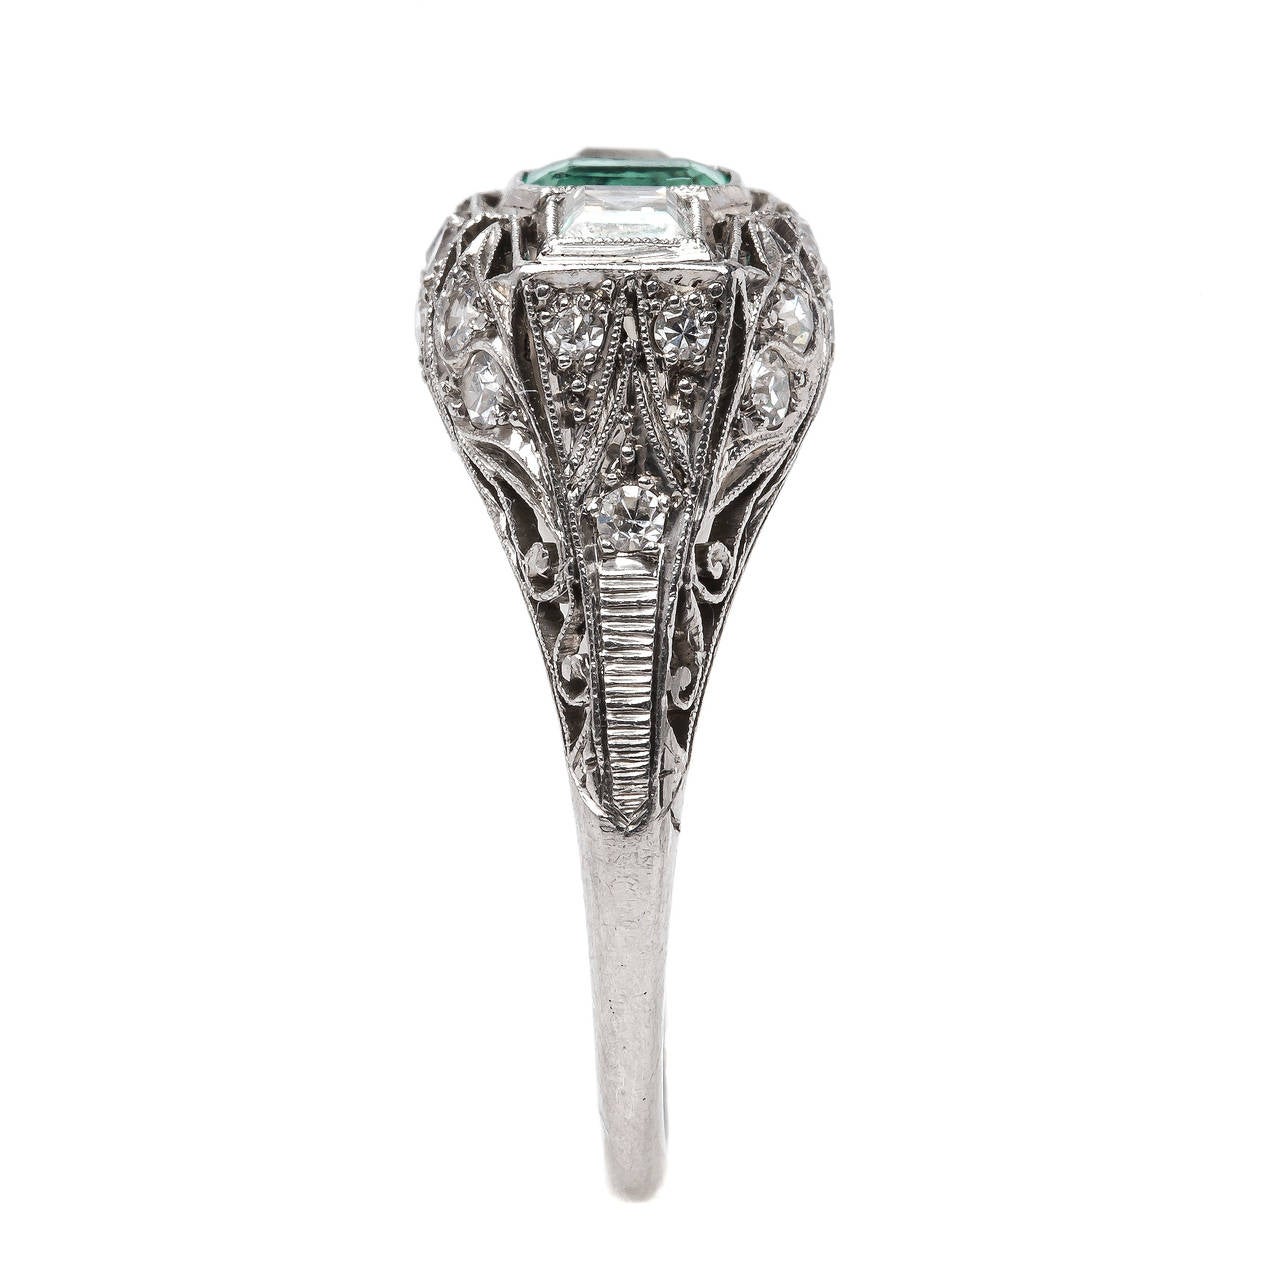 Exceptional Edwardian Era Emerald Diamond Platinum Engagement Ring 1